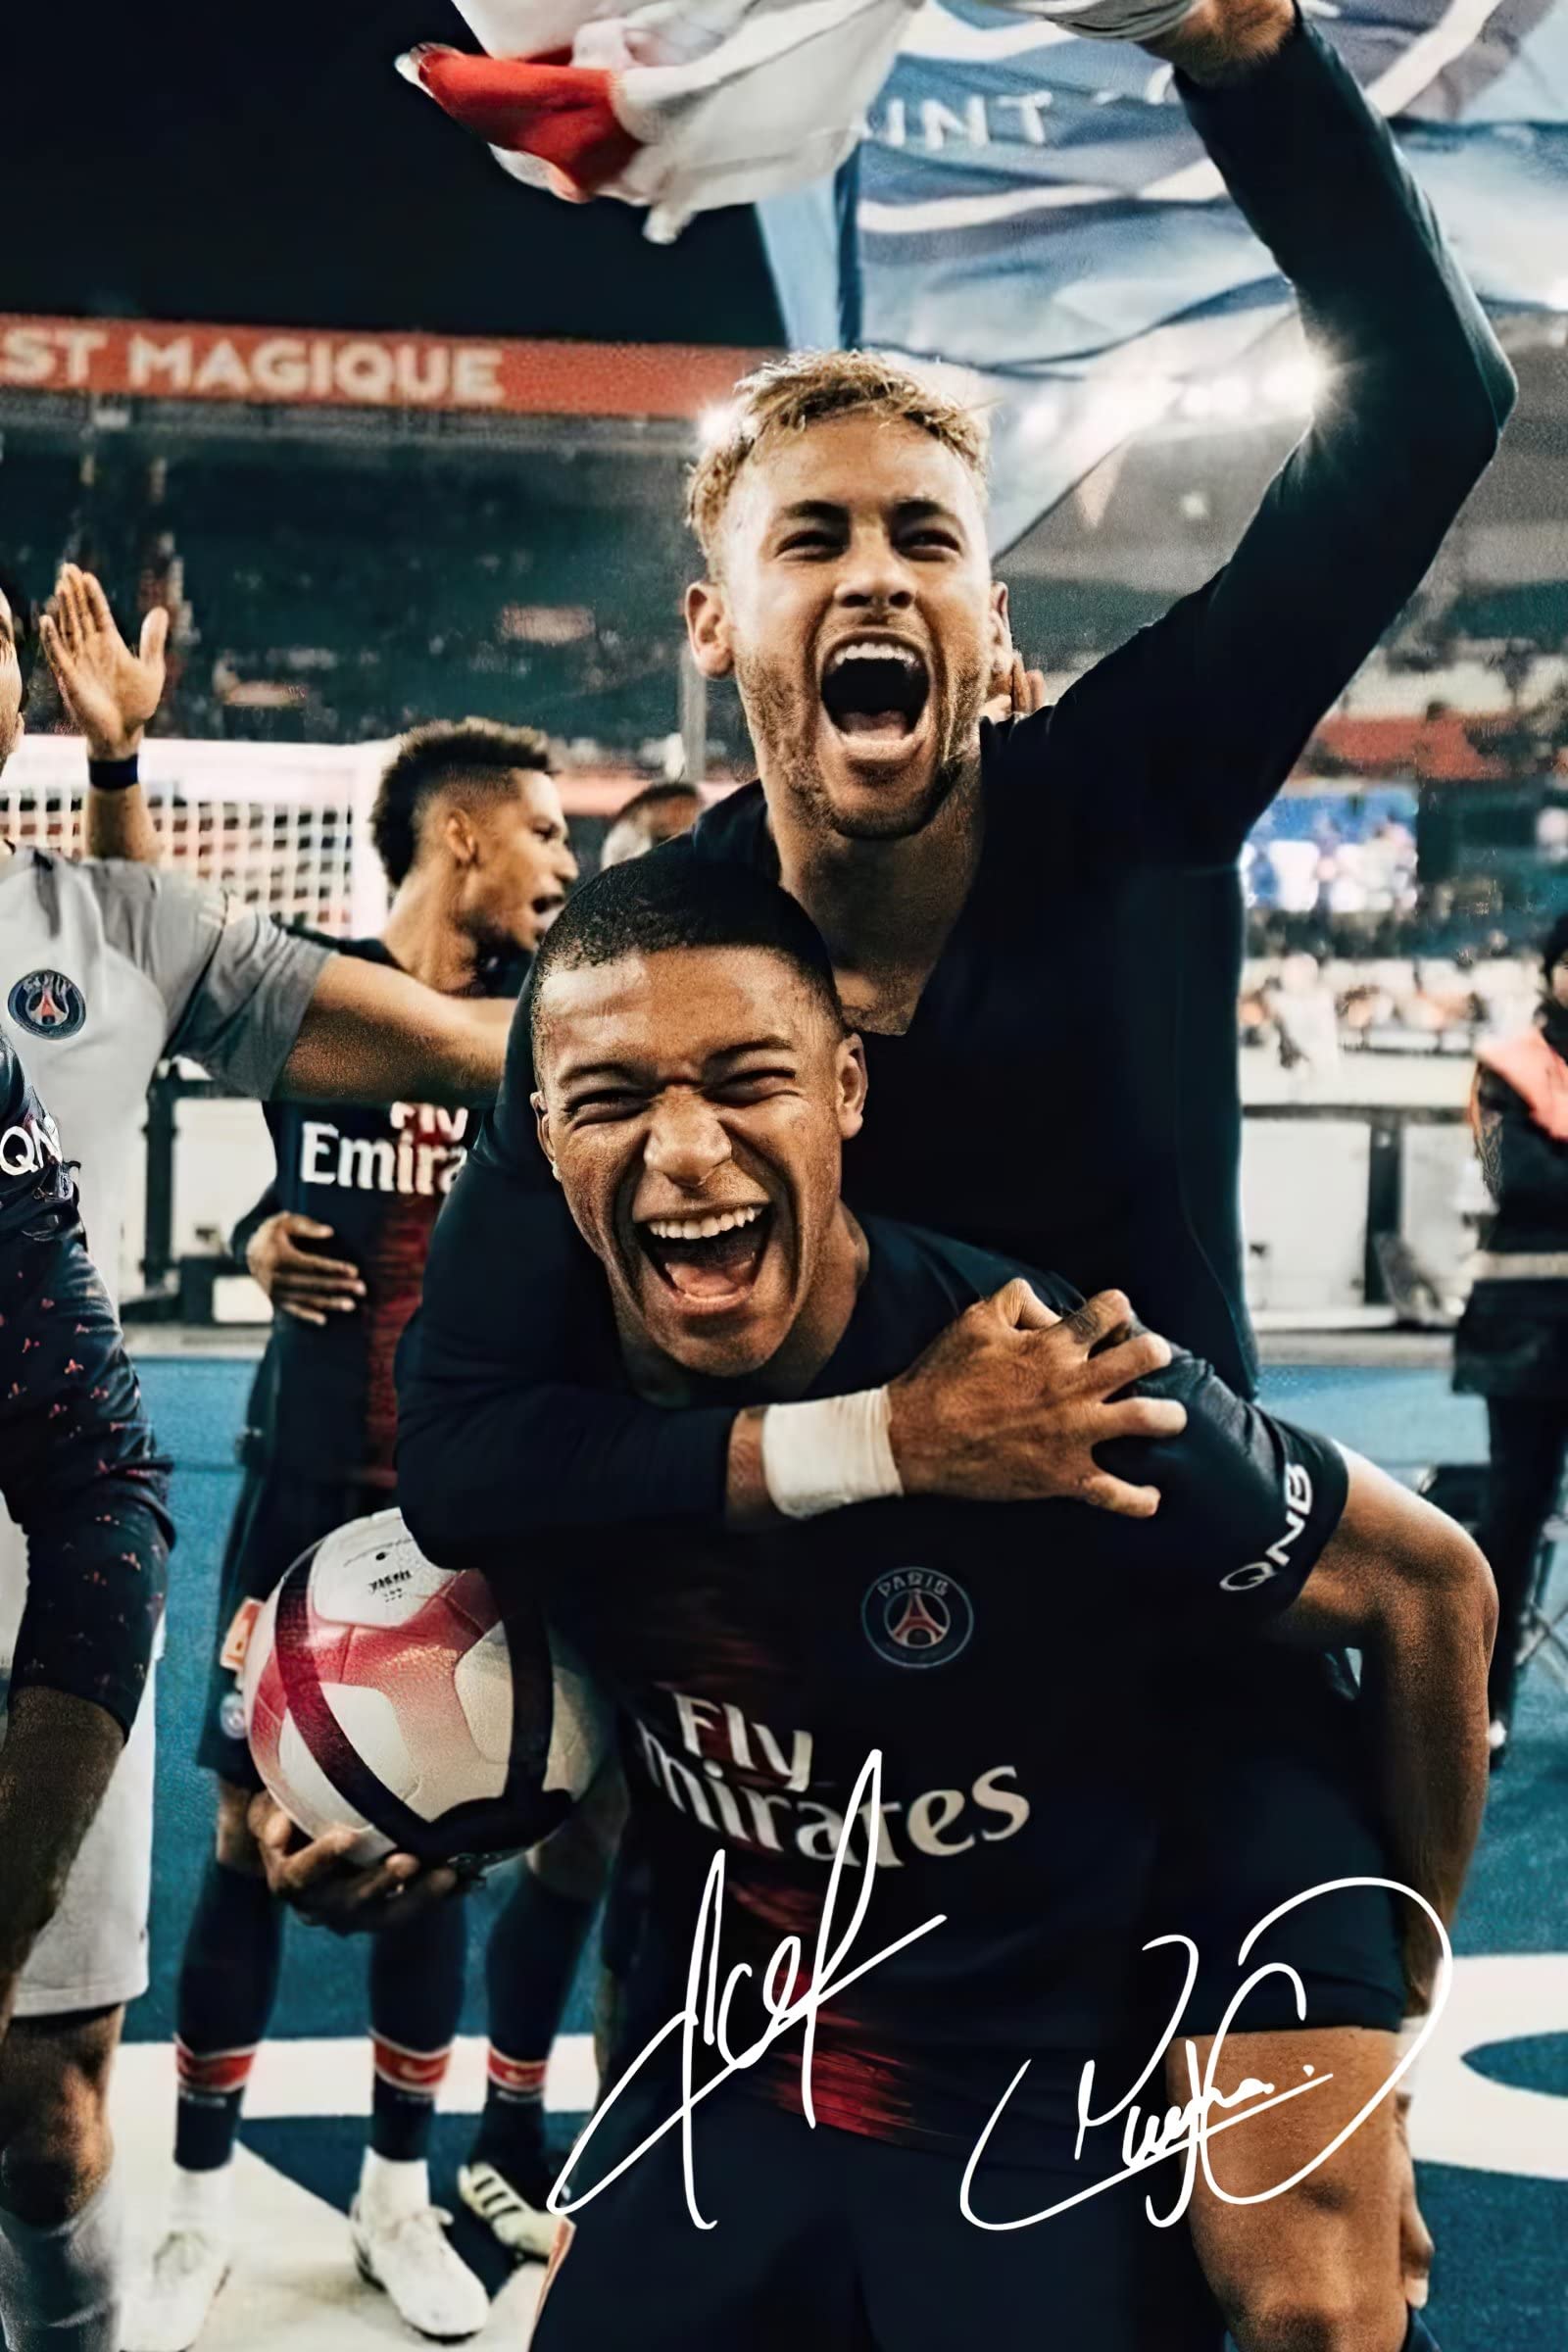 Neymar Jr and Kylian Mbappe celebrate after a match - Neymar